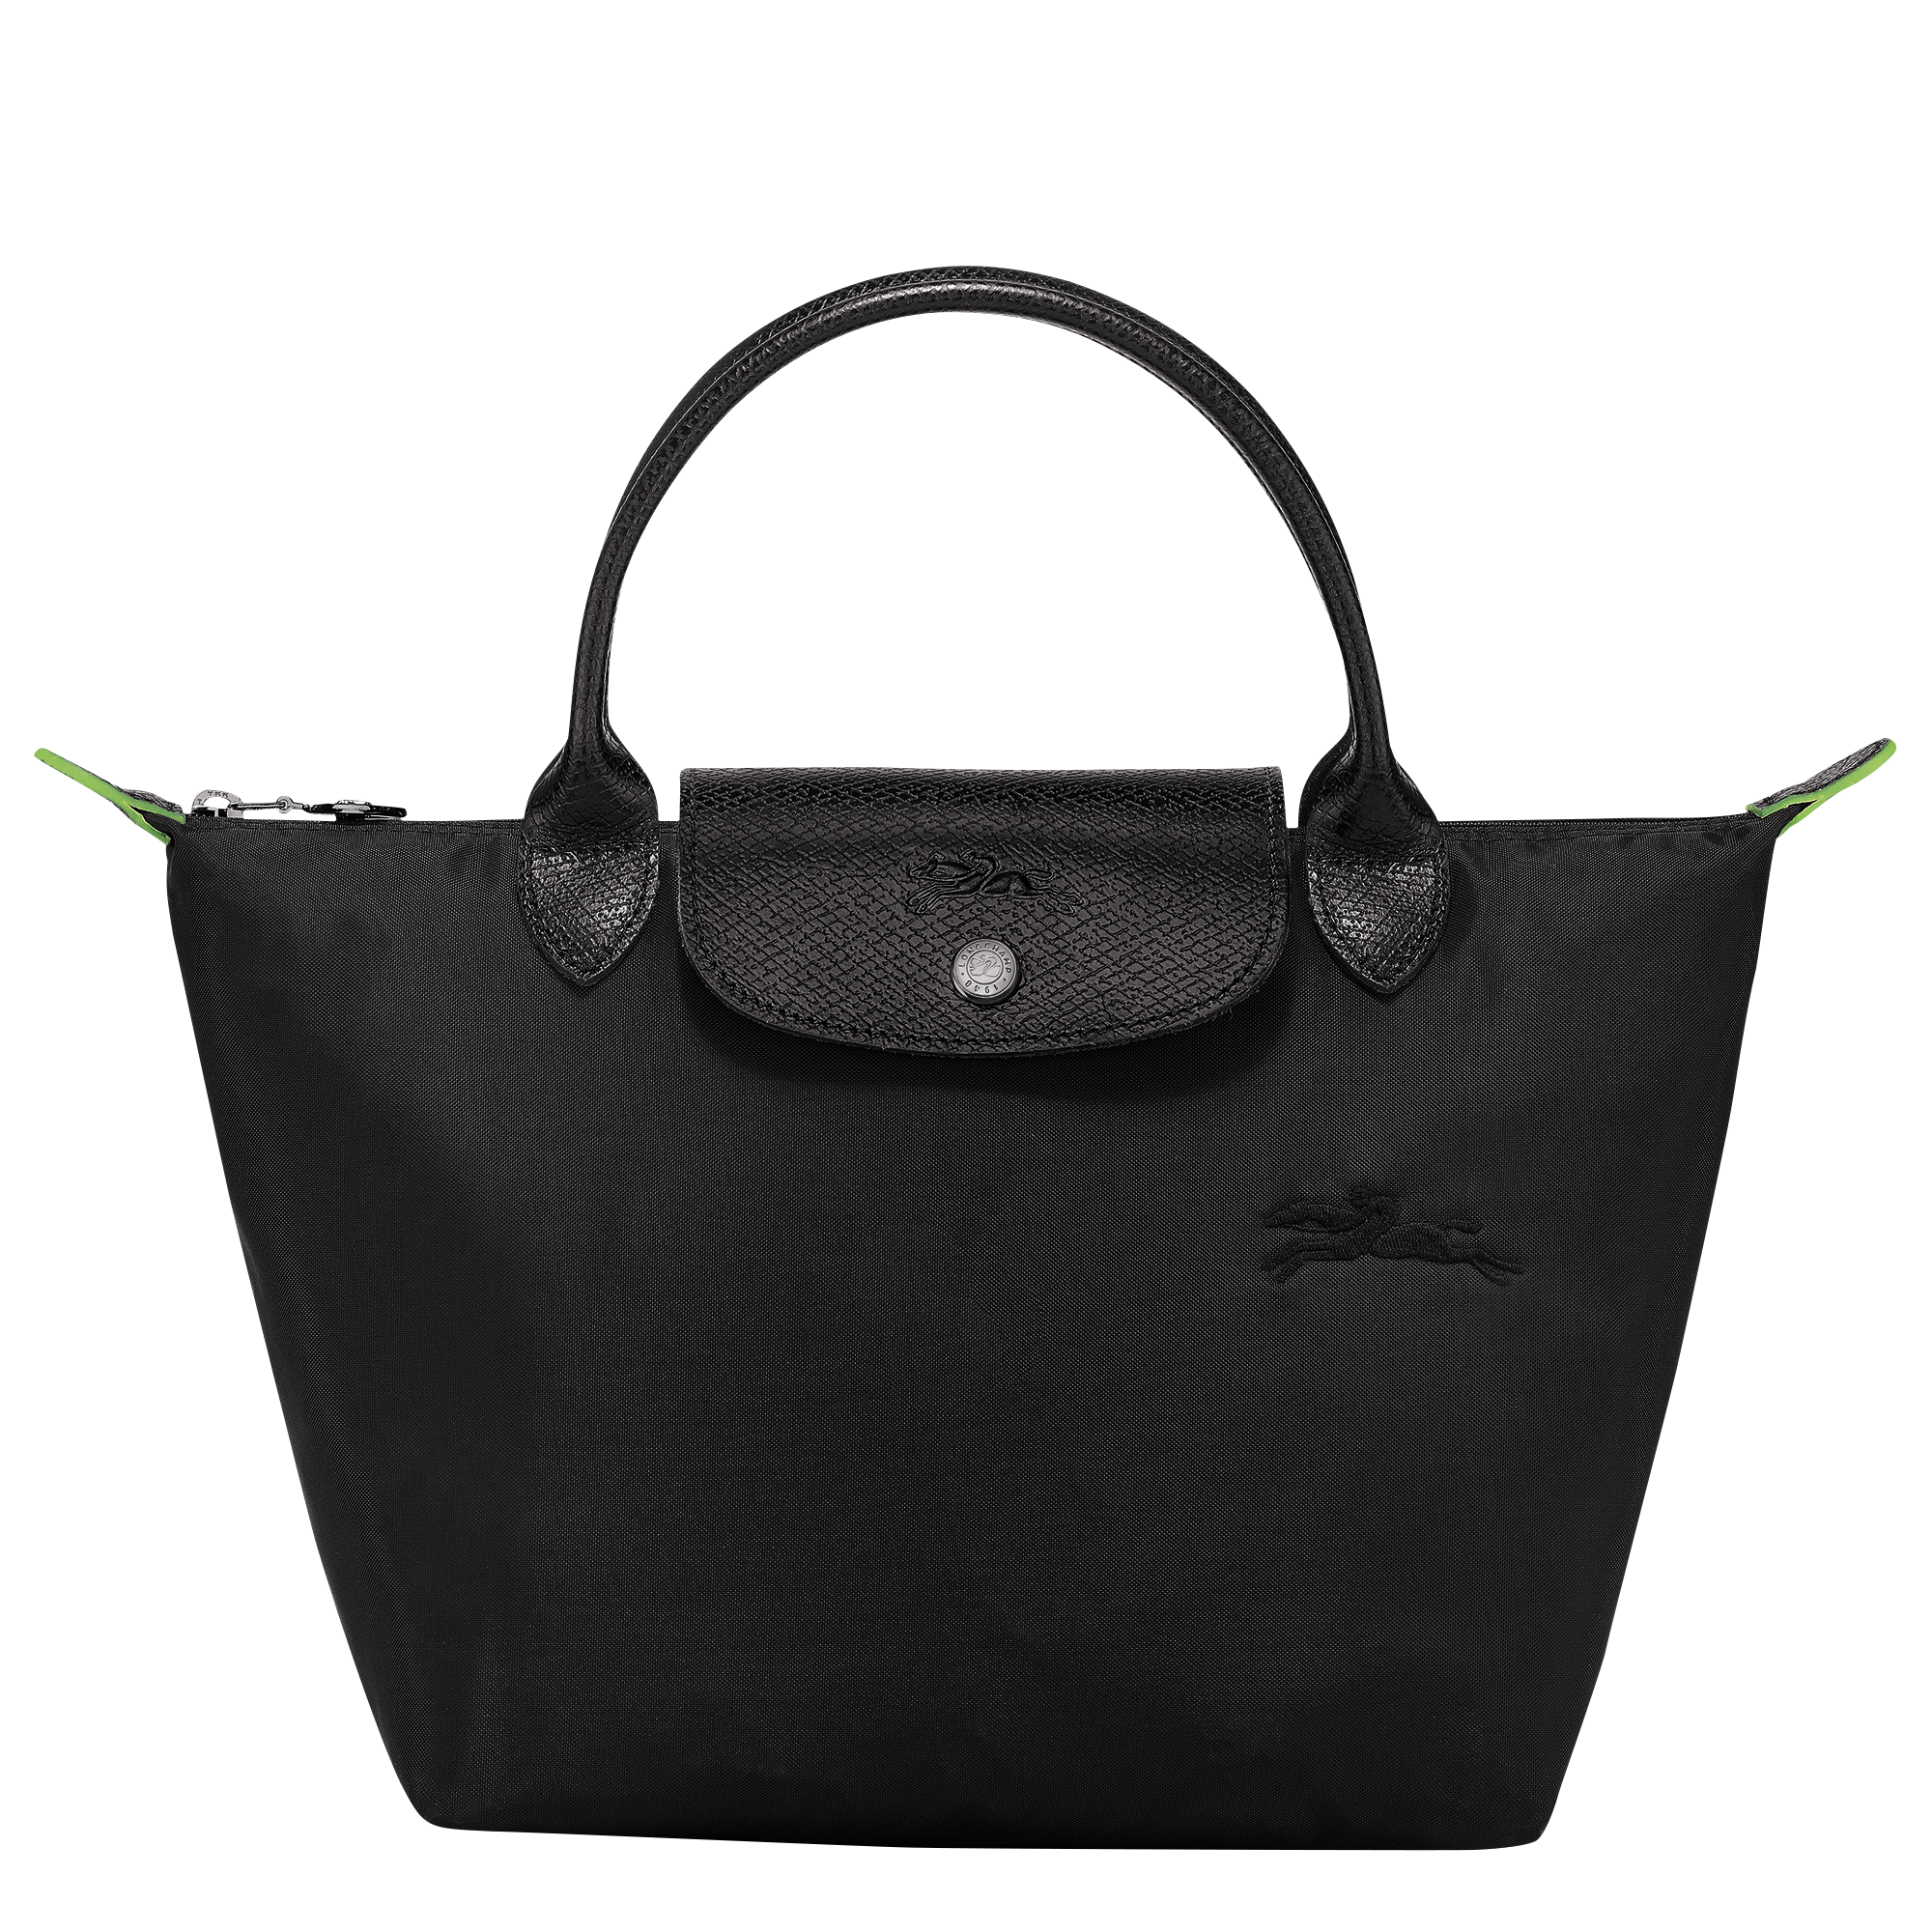 Le Pliage Green Handbag S, Black